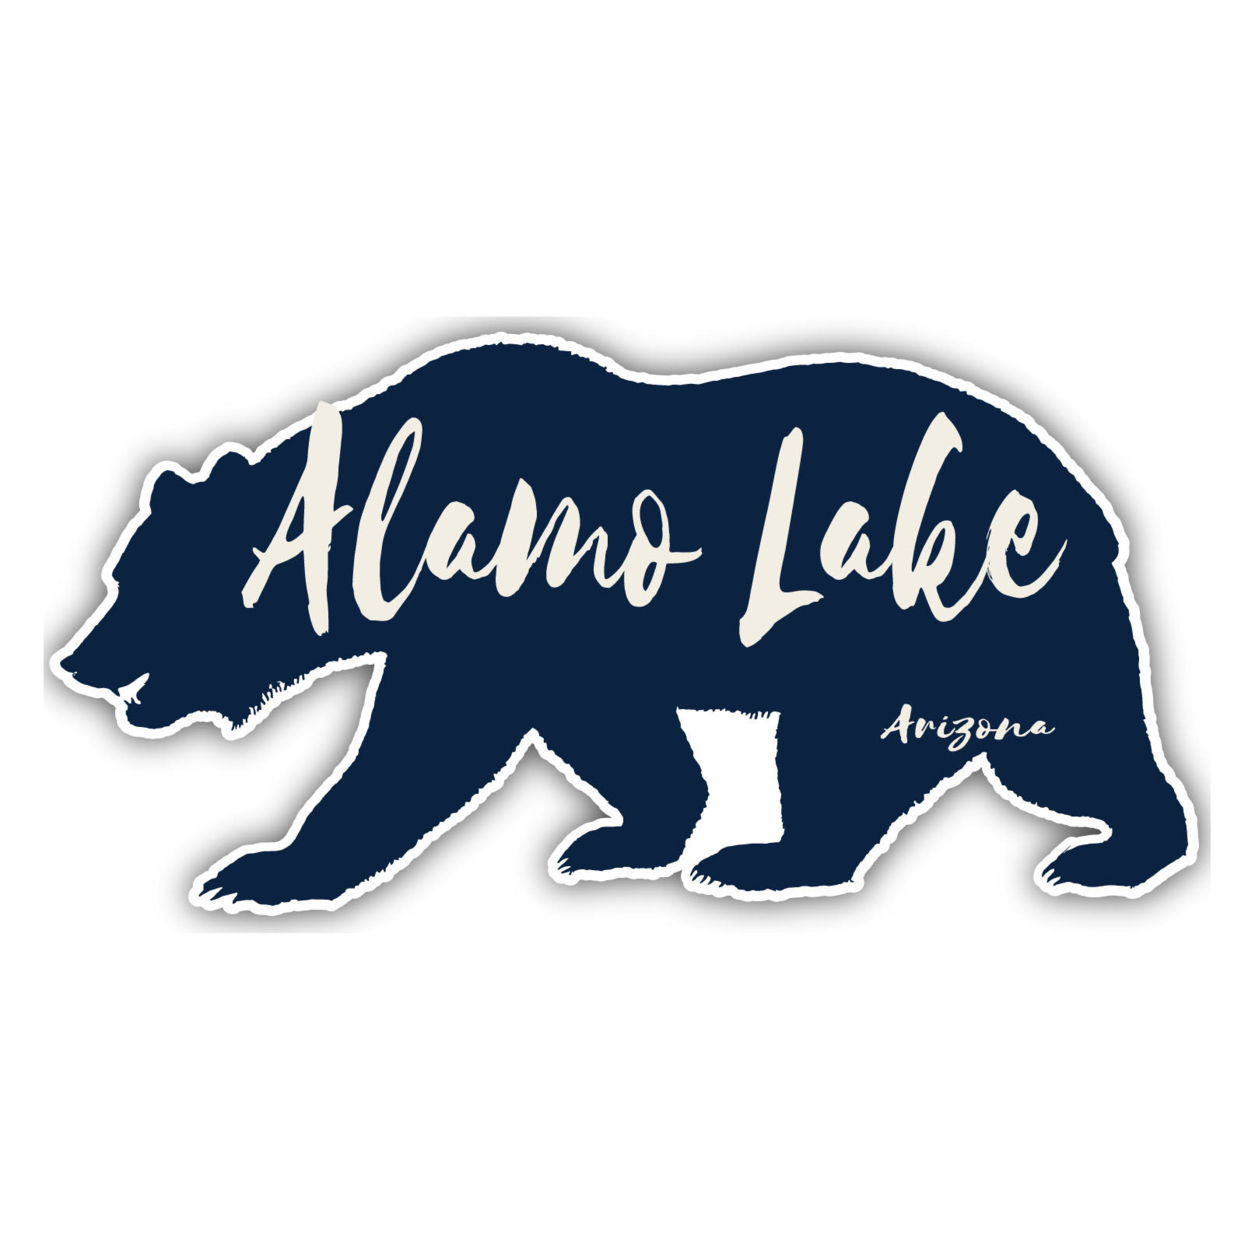 Alamo Lake Arizona Souvenir Decorative Stickers (Choose Theme And Size) - 4-Pack, 6-Inch, Tent